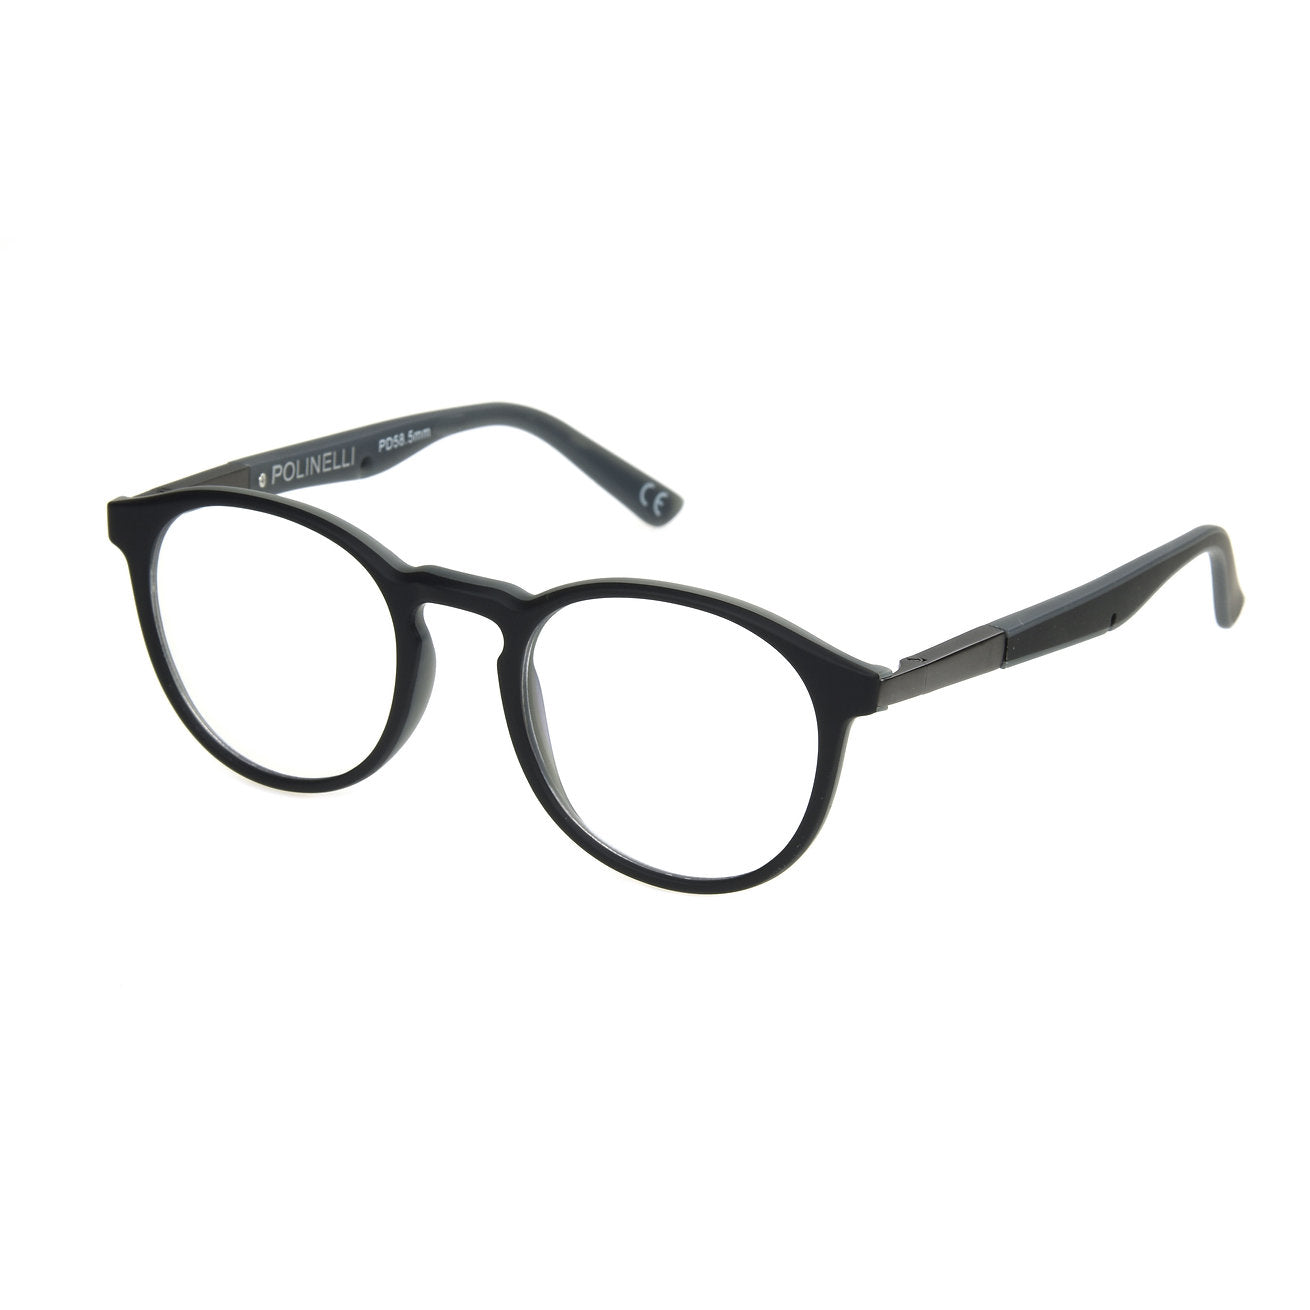 Polinelli eyeglasses model P304 black